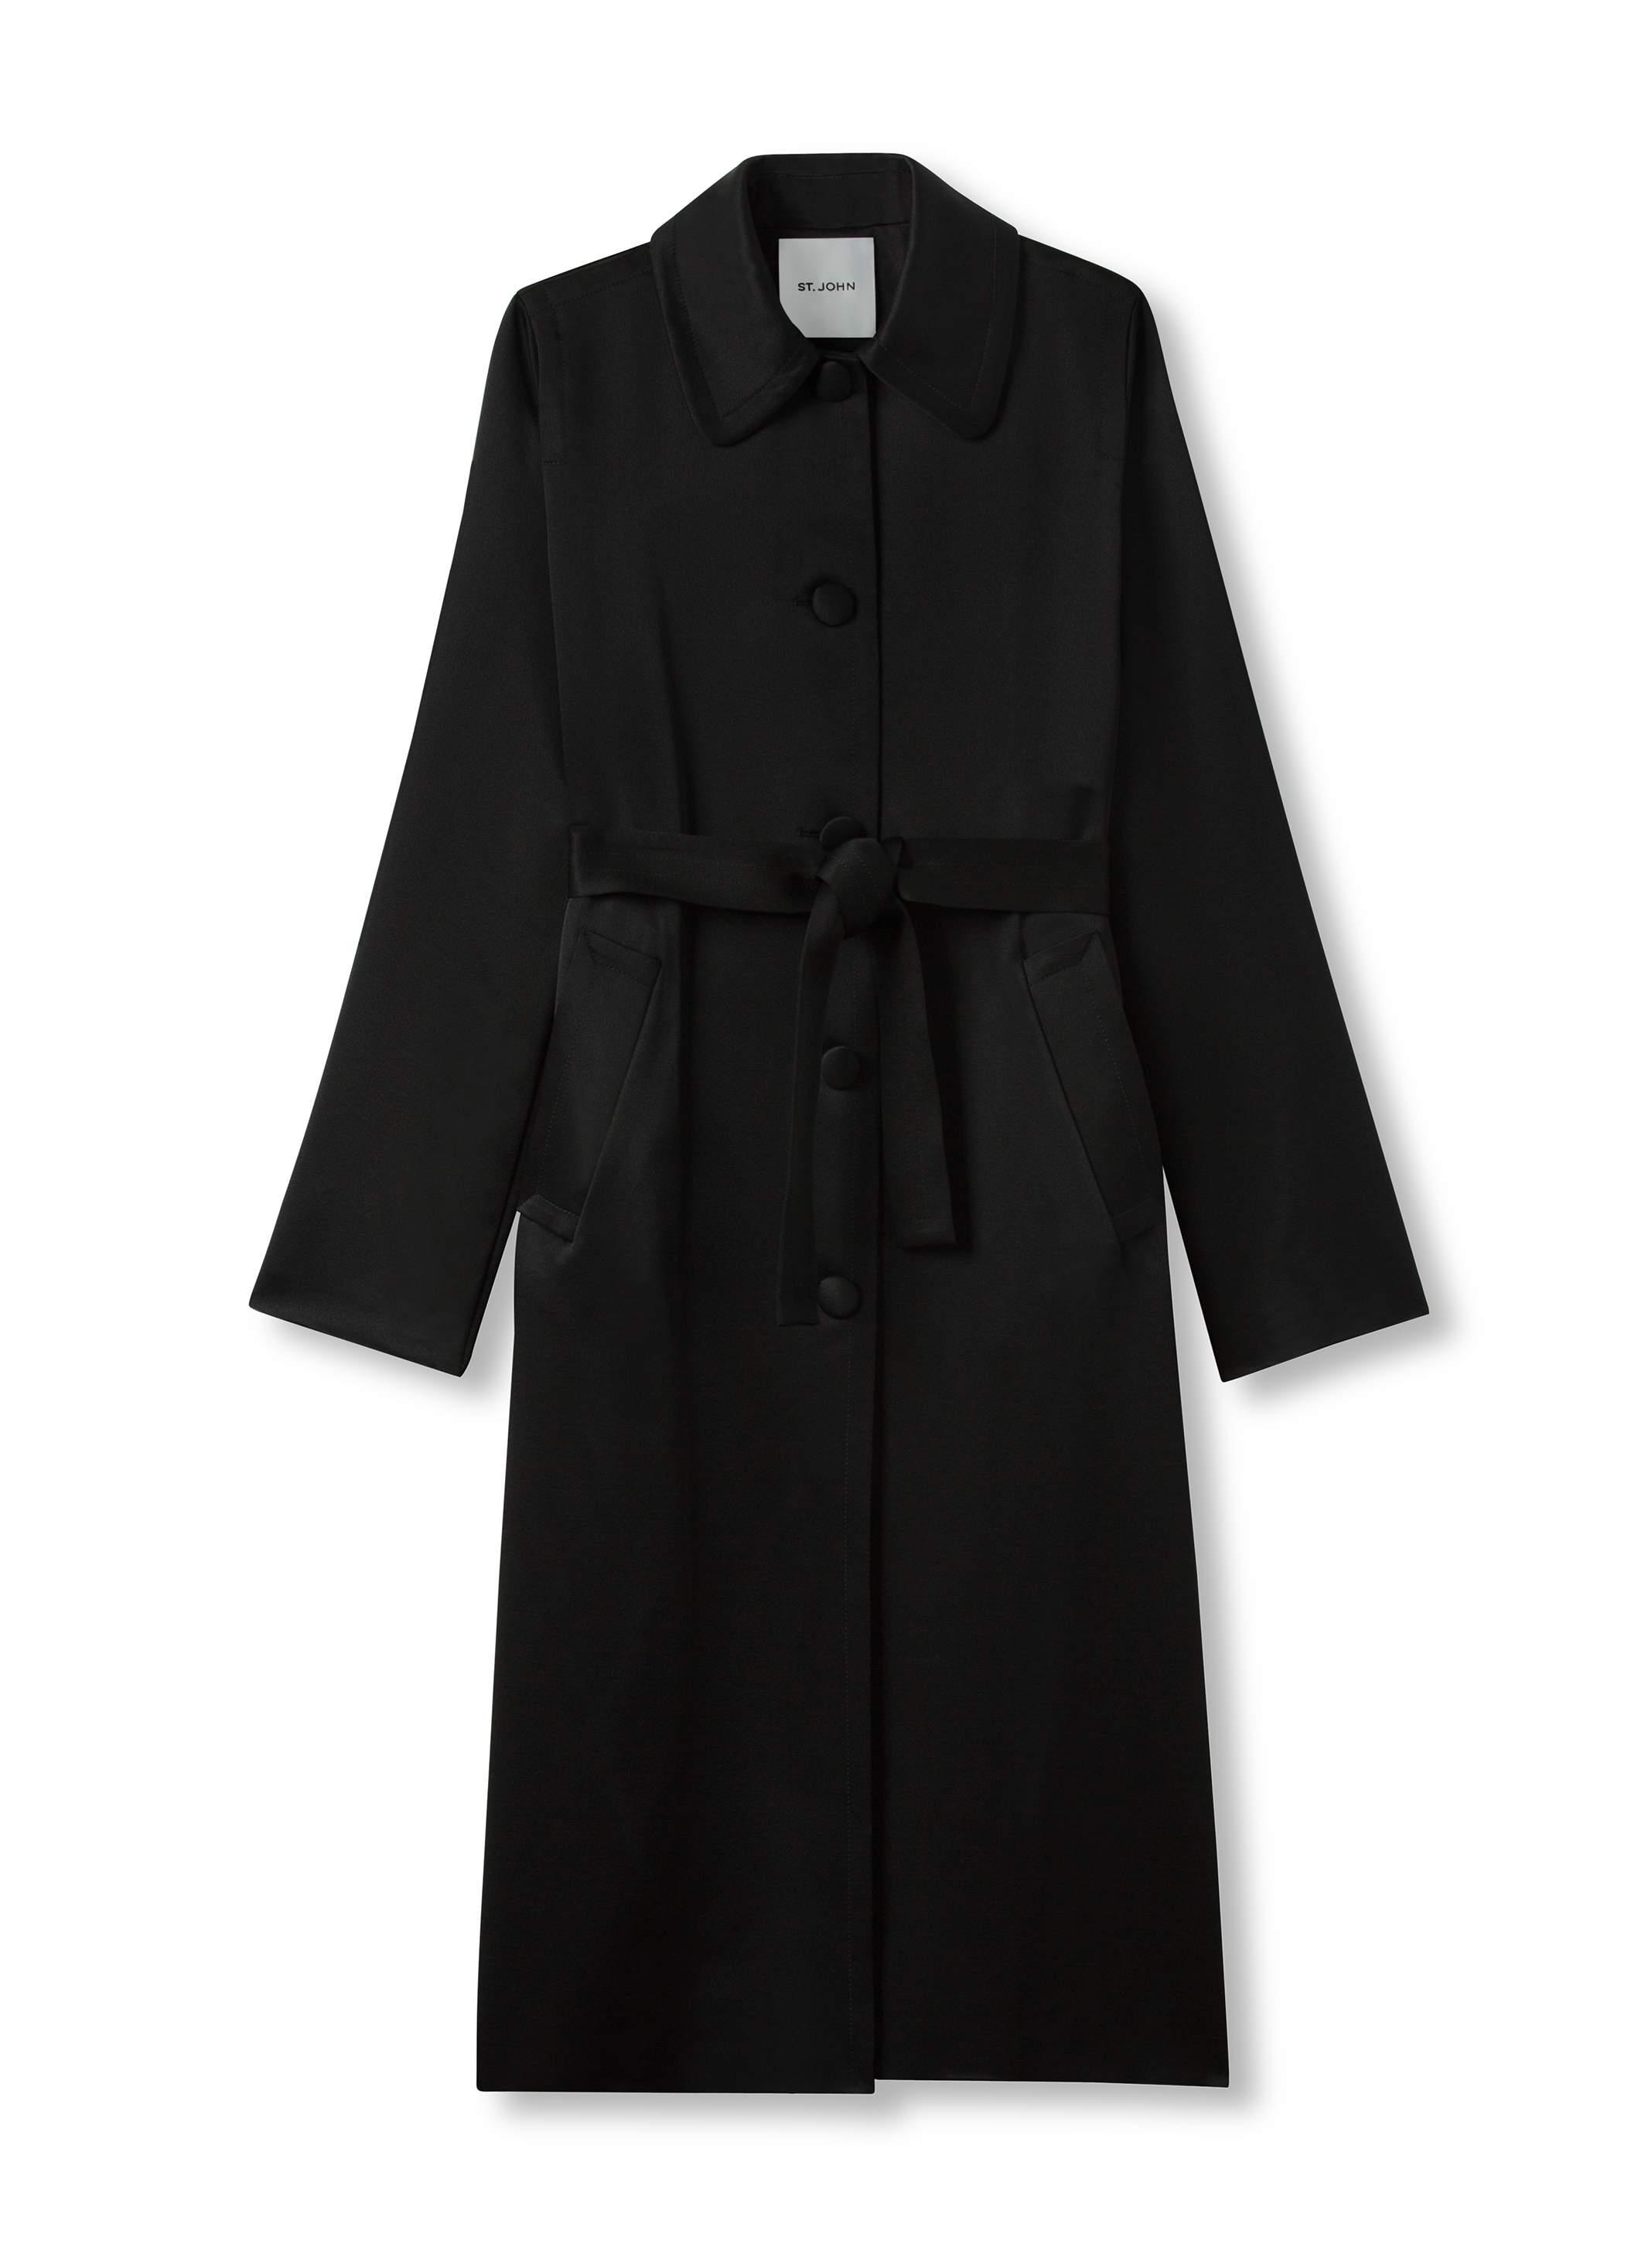 St. John Satin Crepe Jacket in Black | Lyst